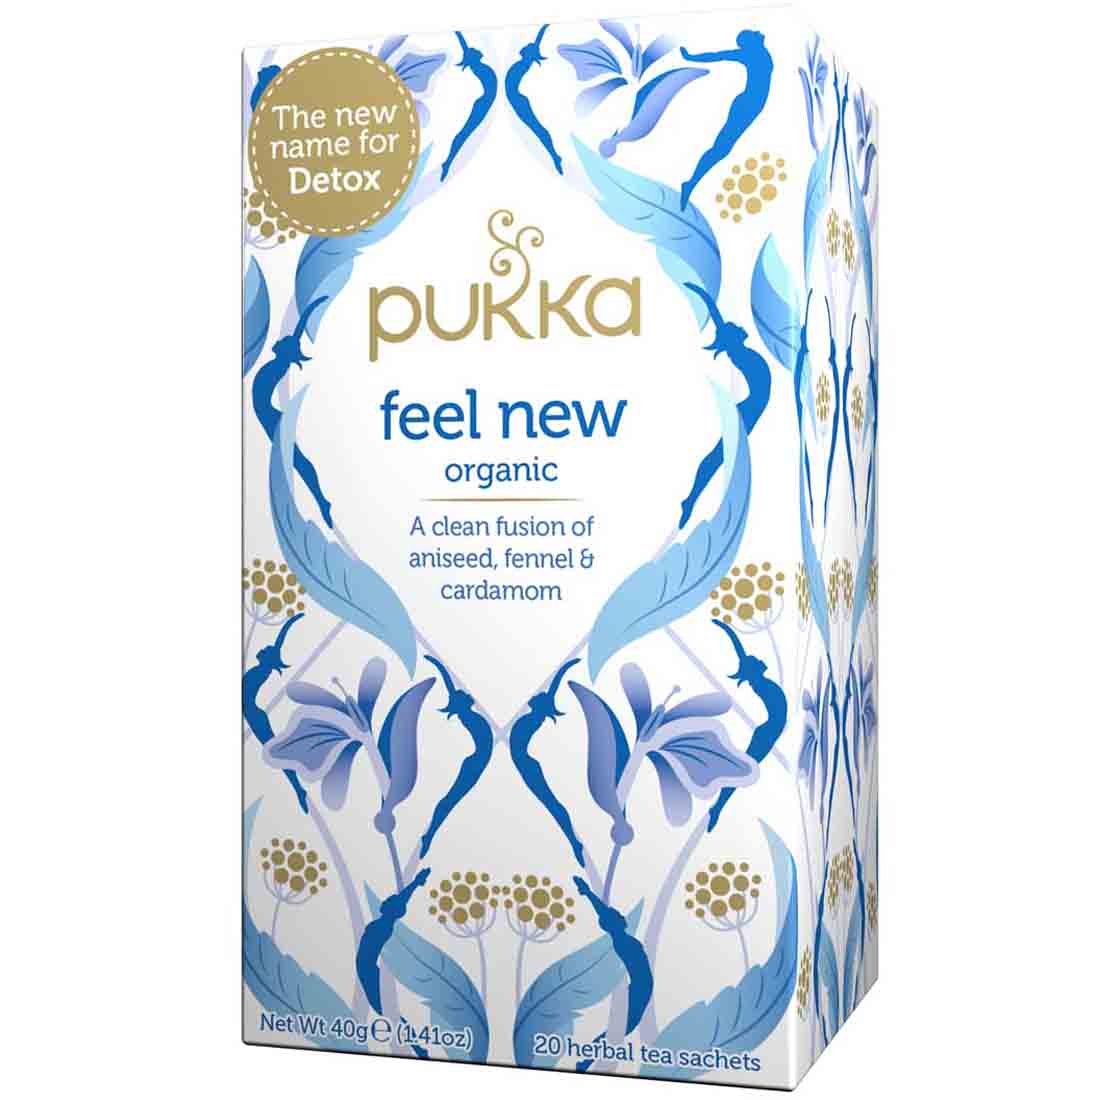 Pukka Organic Feel New (Formerly Detox) Tea, 20 Tea Sachets